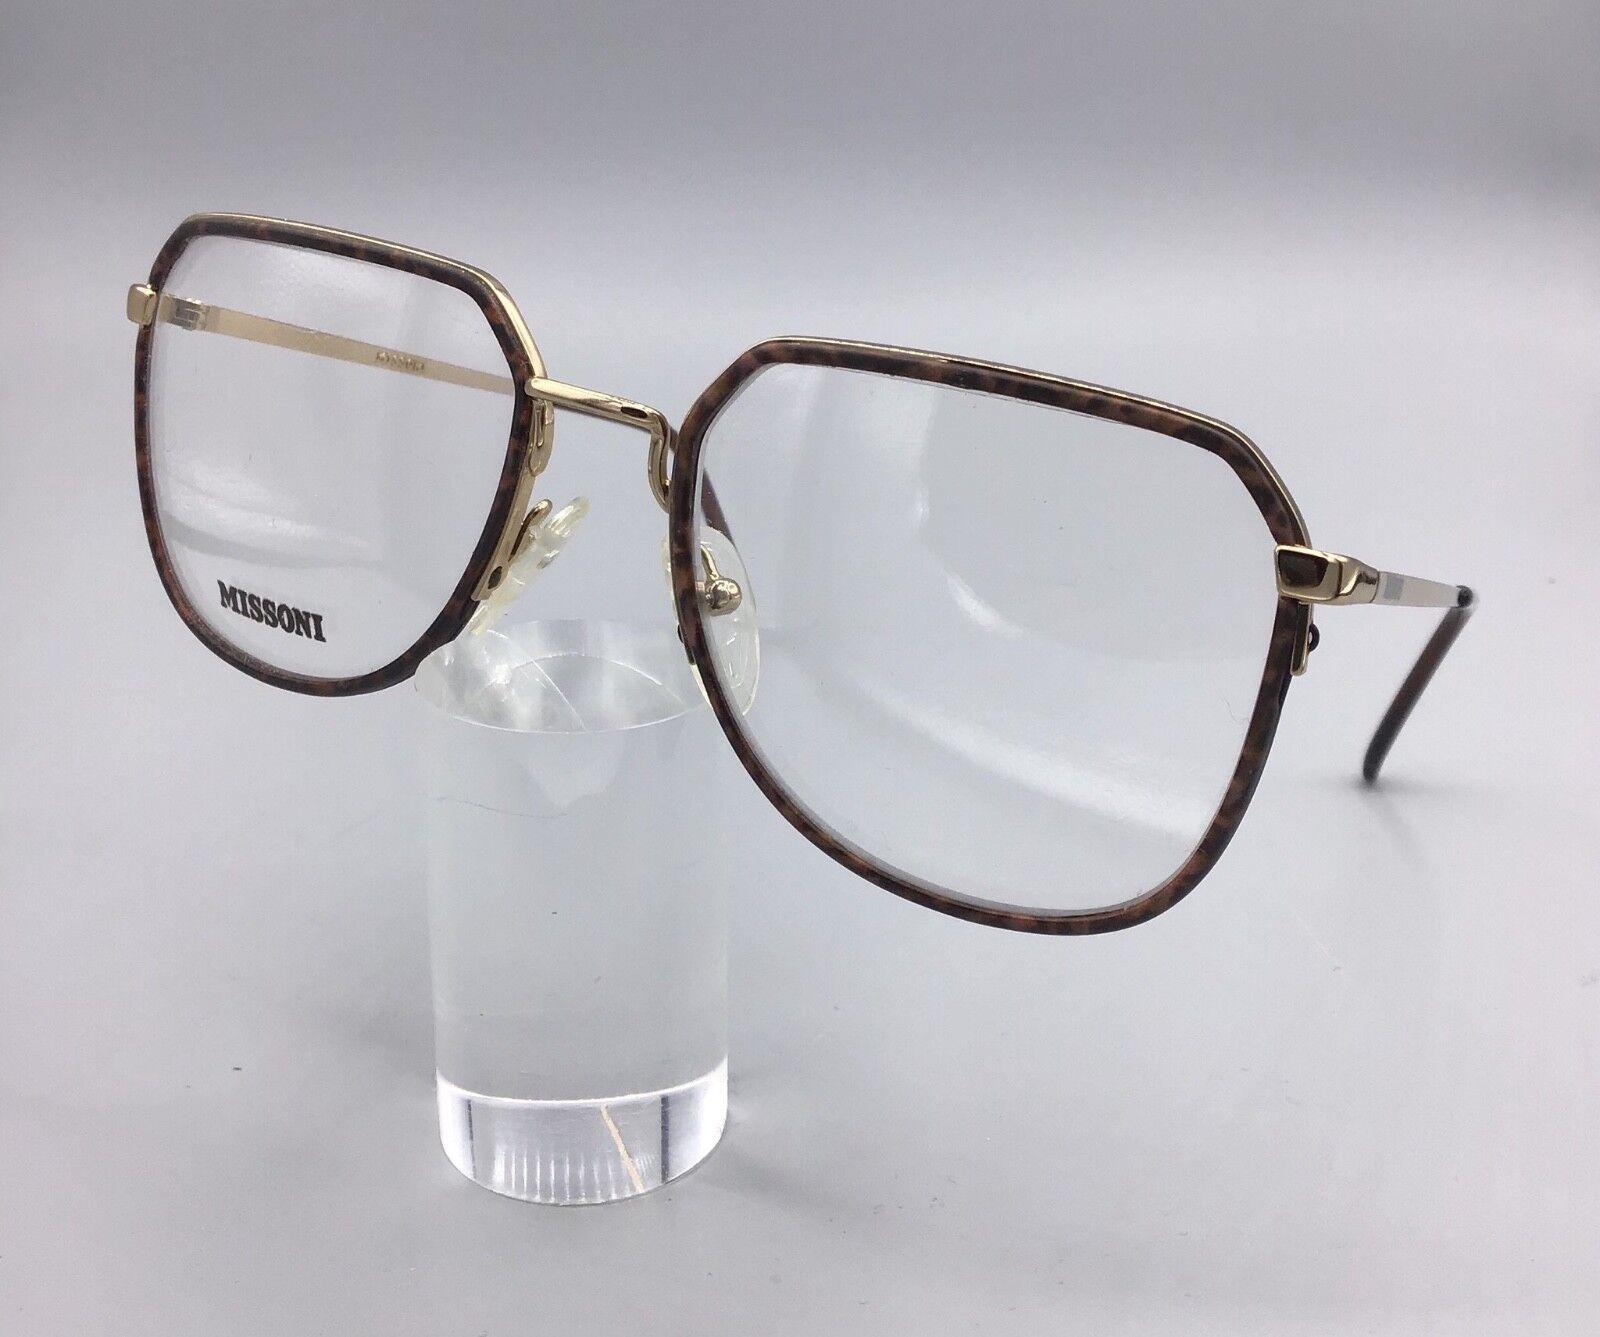 Missoni occhiale vintage model M875 79T Eyewear frame brillen lunettes